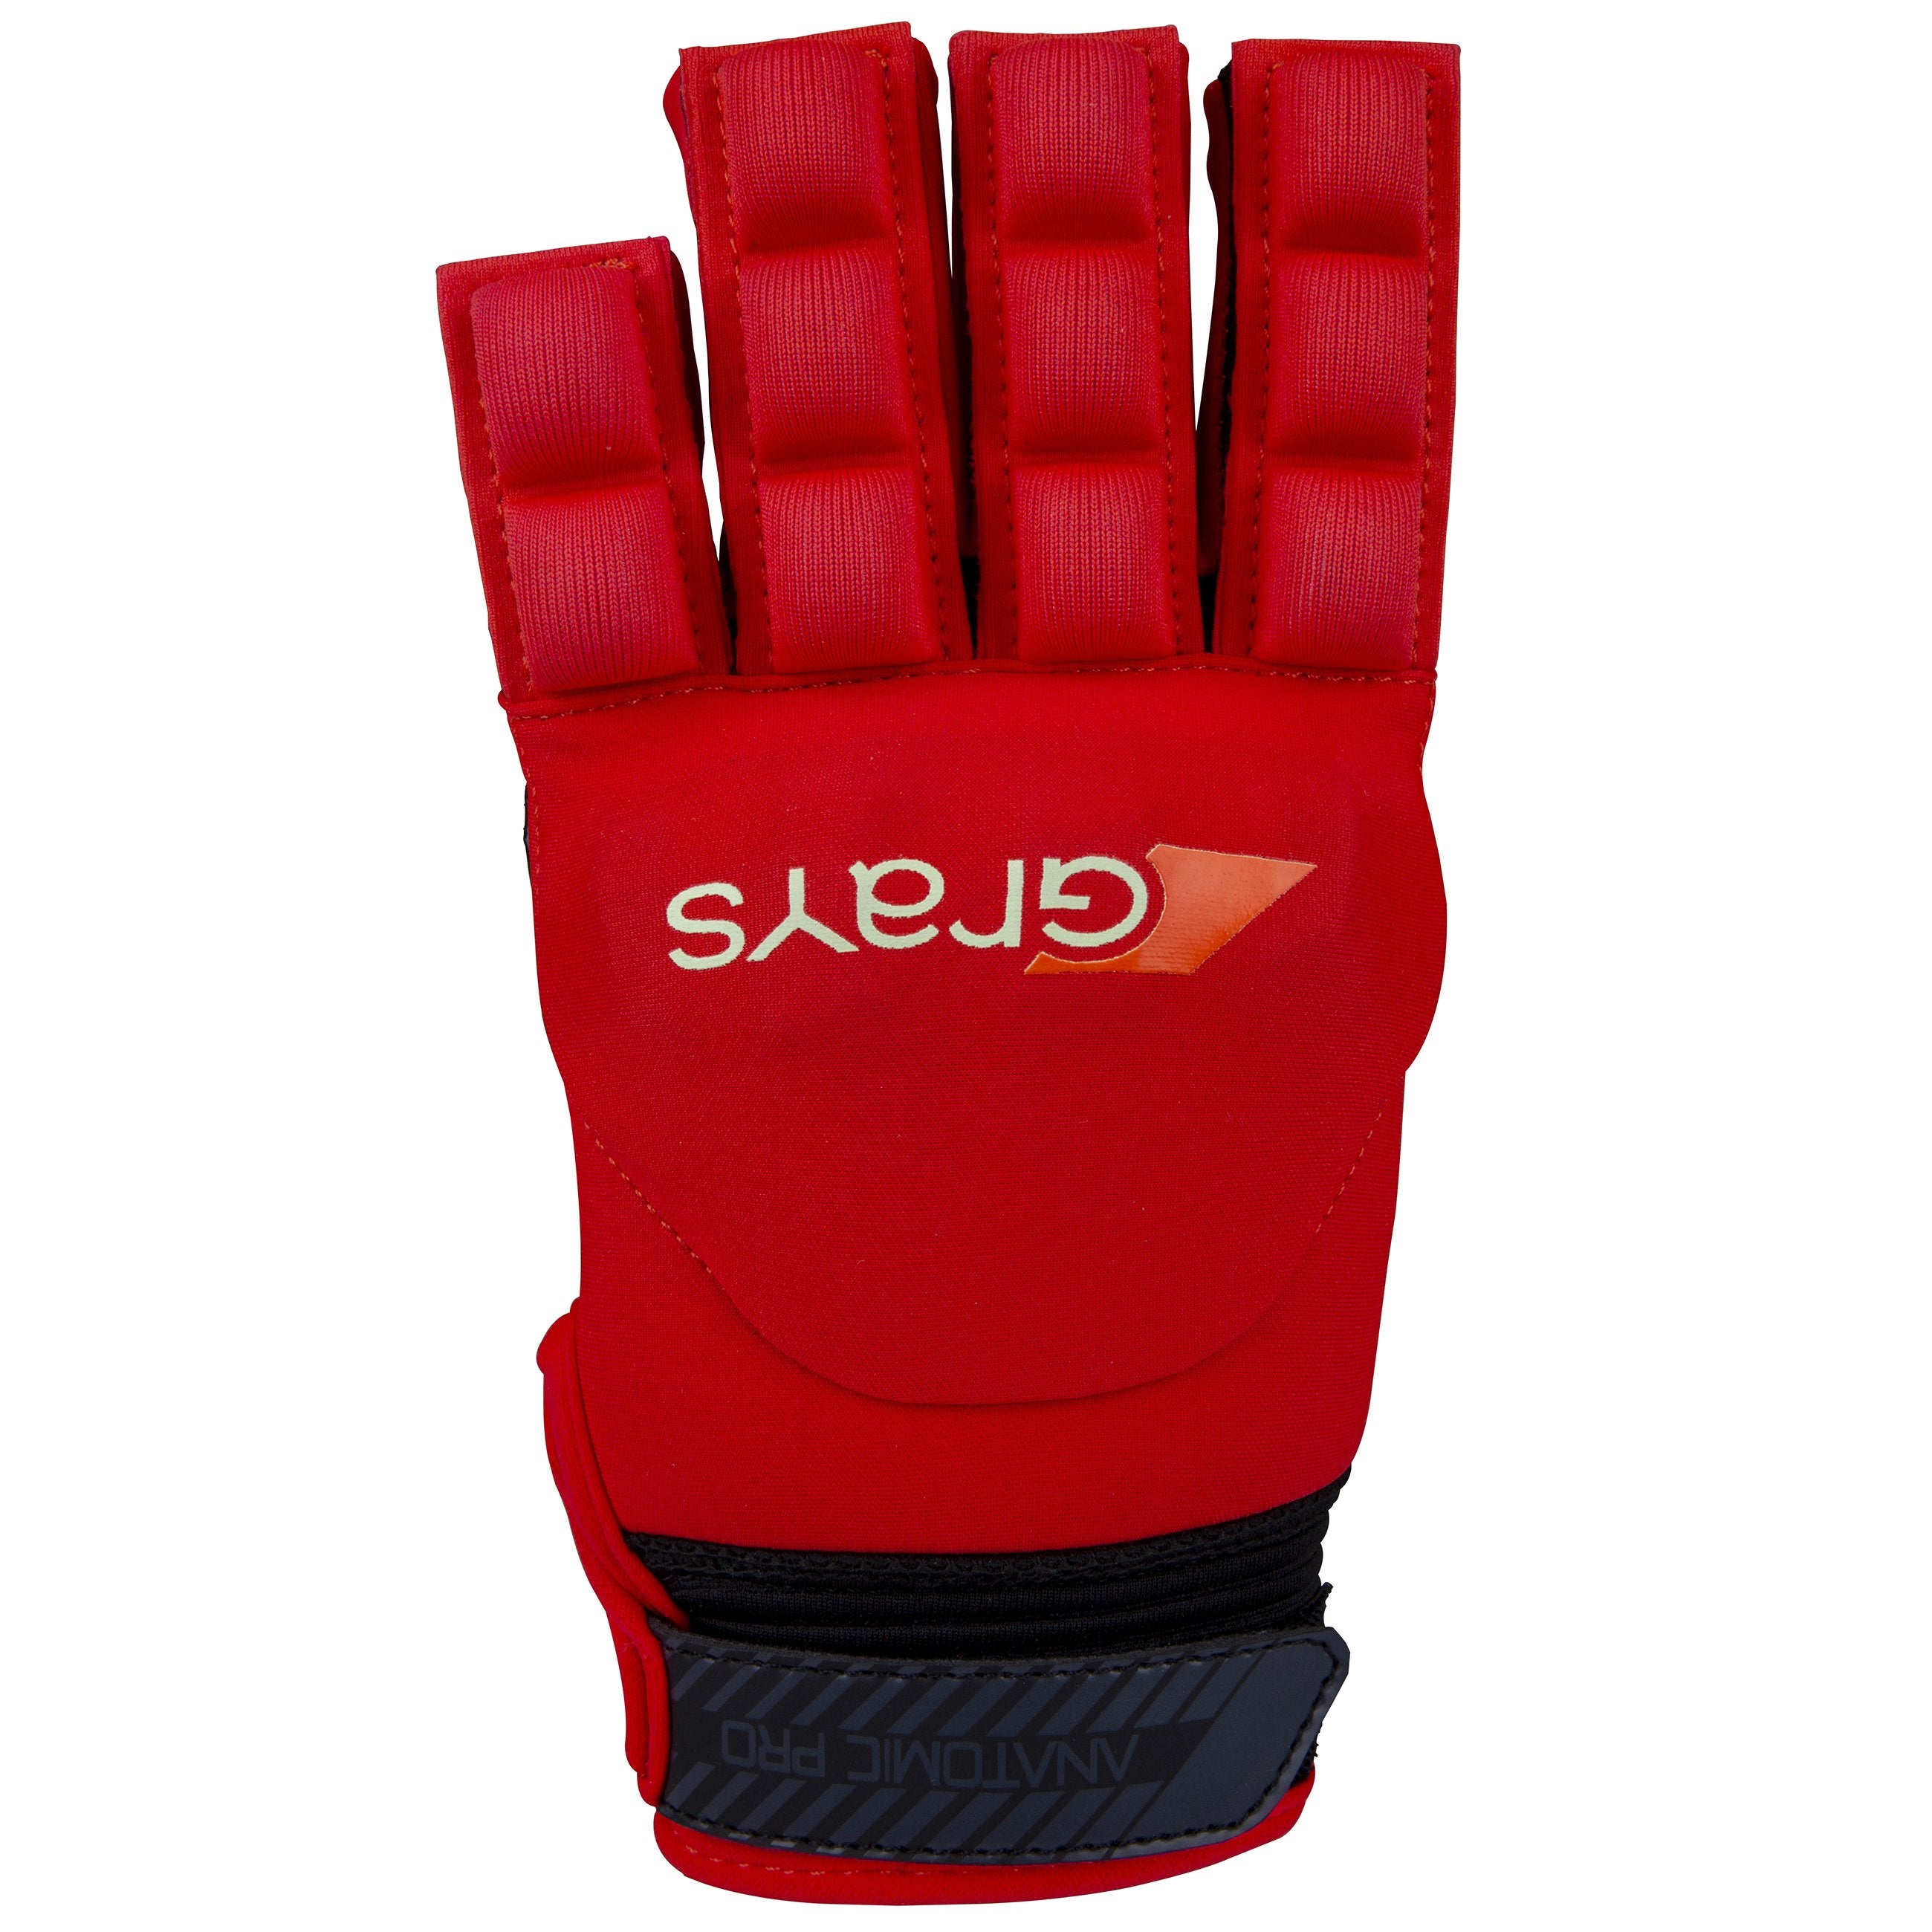 2600 HGGA19 6209305 Glove Anatomic Pro Fluo Red Left Hand Back